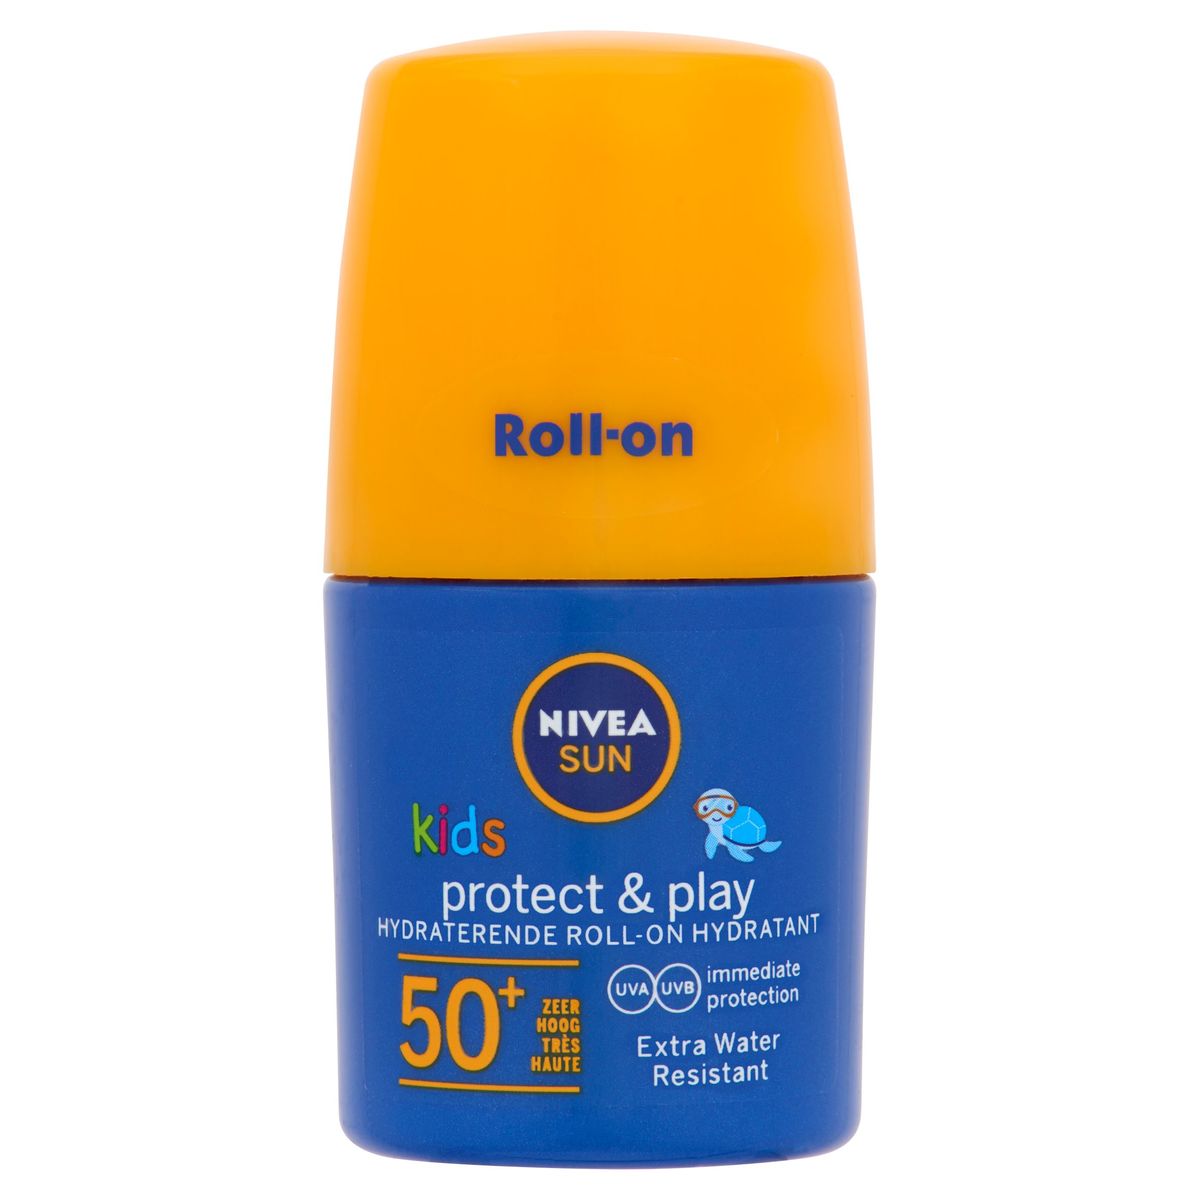 Nivea Sun Kids Protect & Play Roll-On Hydratant 50+ Très Haute 50 ml